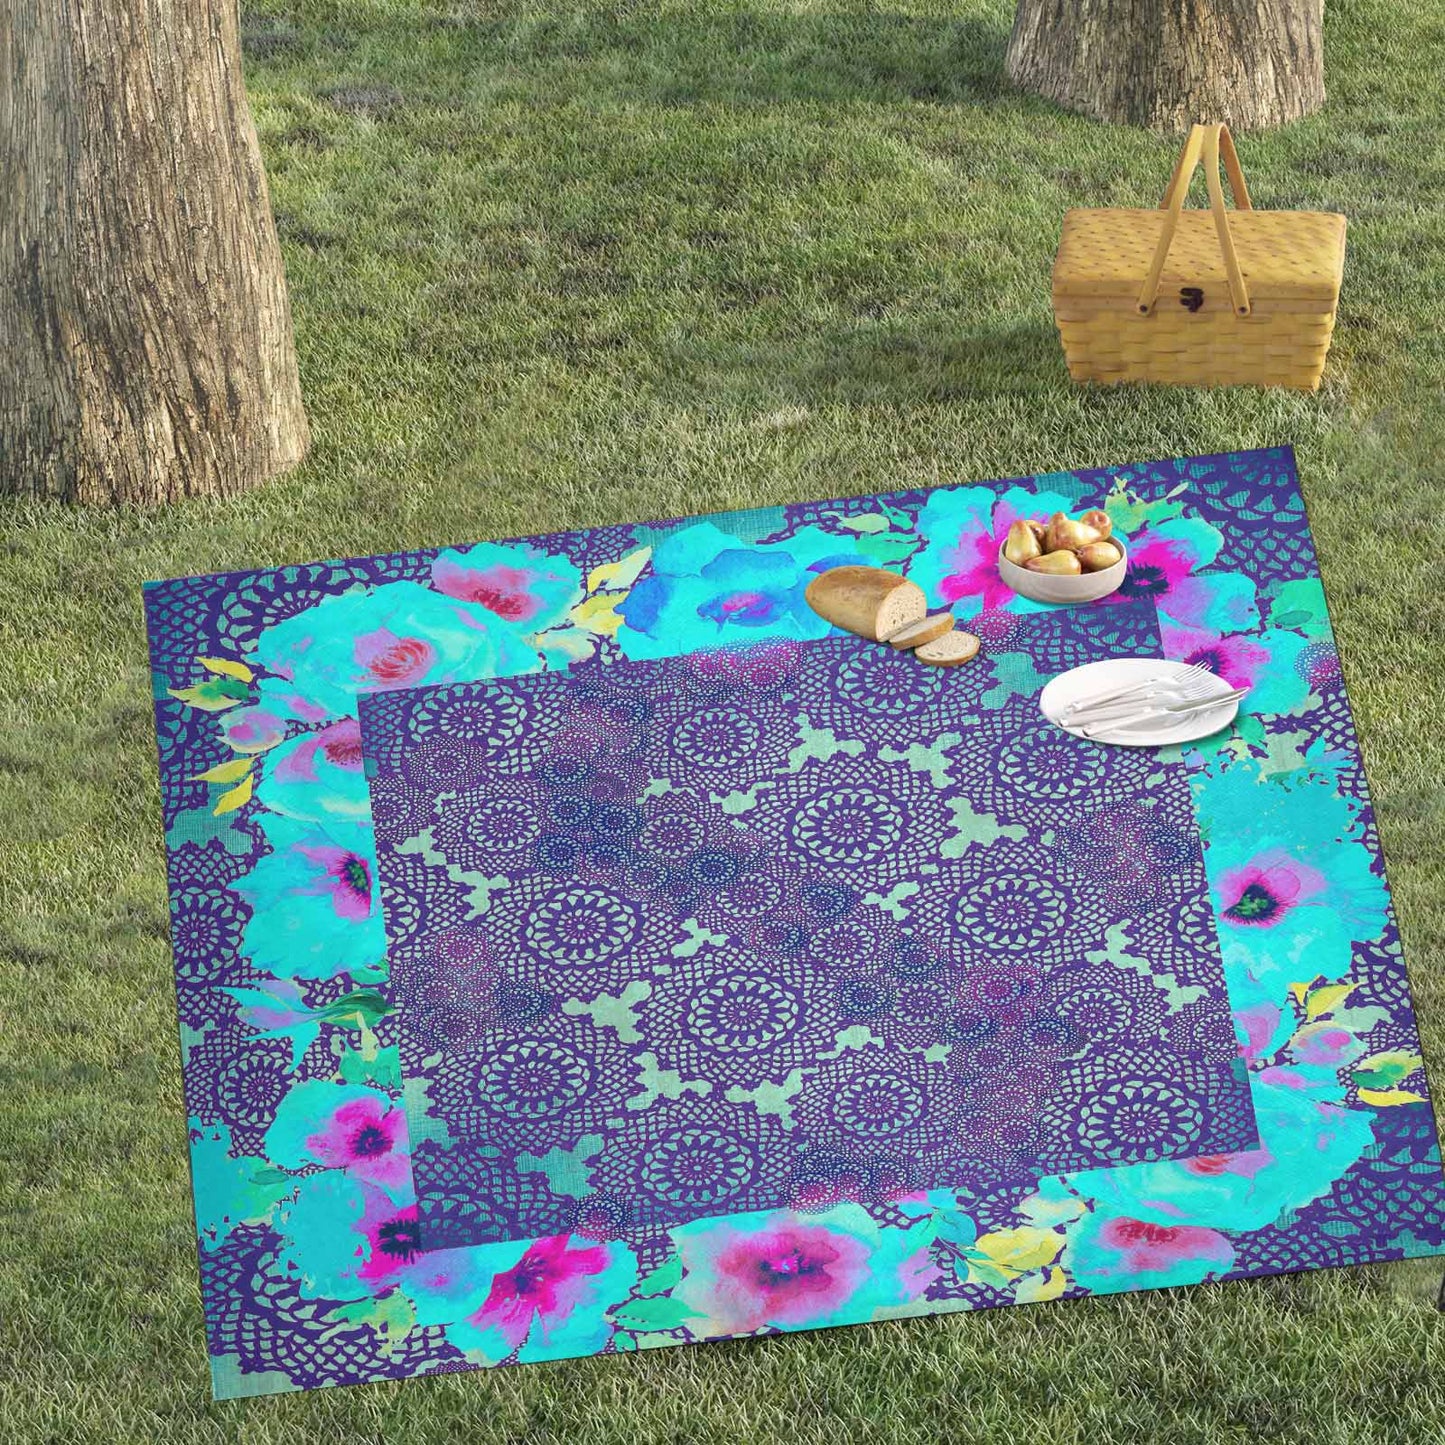 Victorian lace print waterproof picnic mat, 69 x 55in, design 14